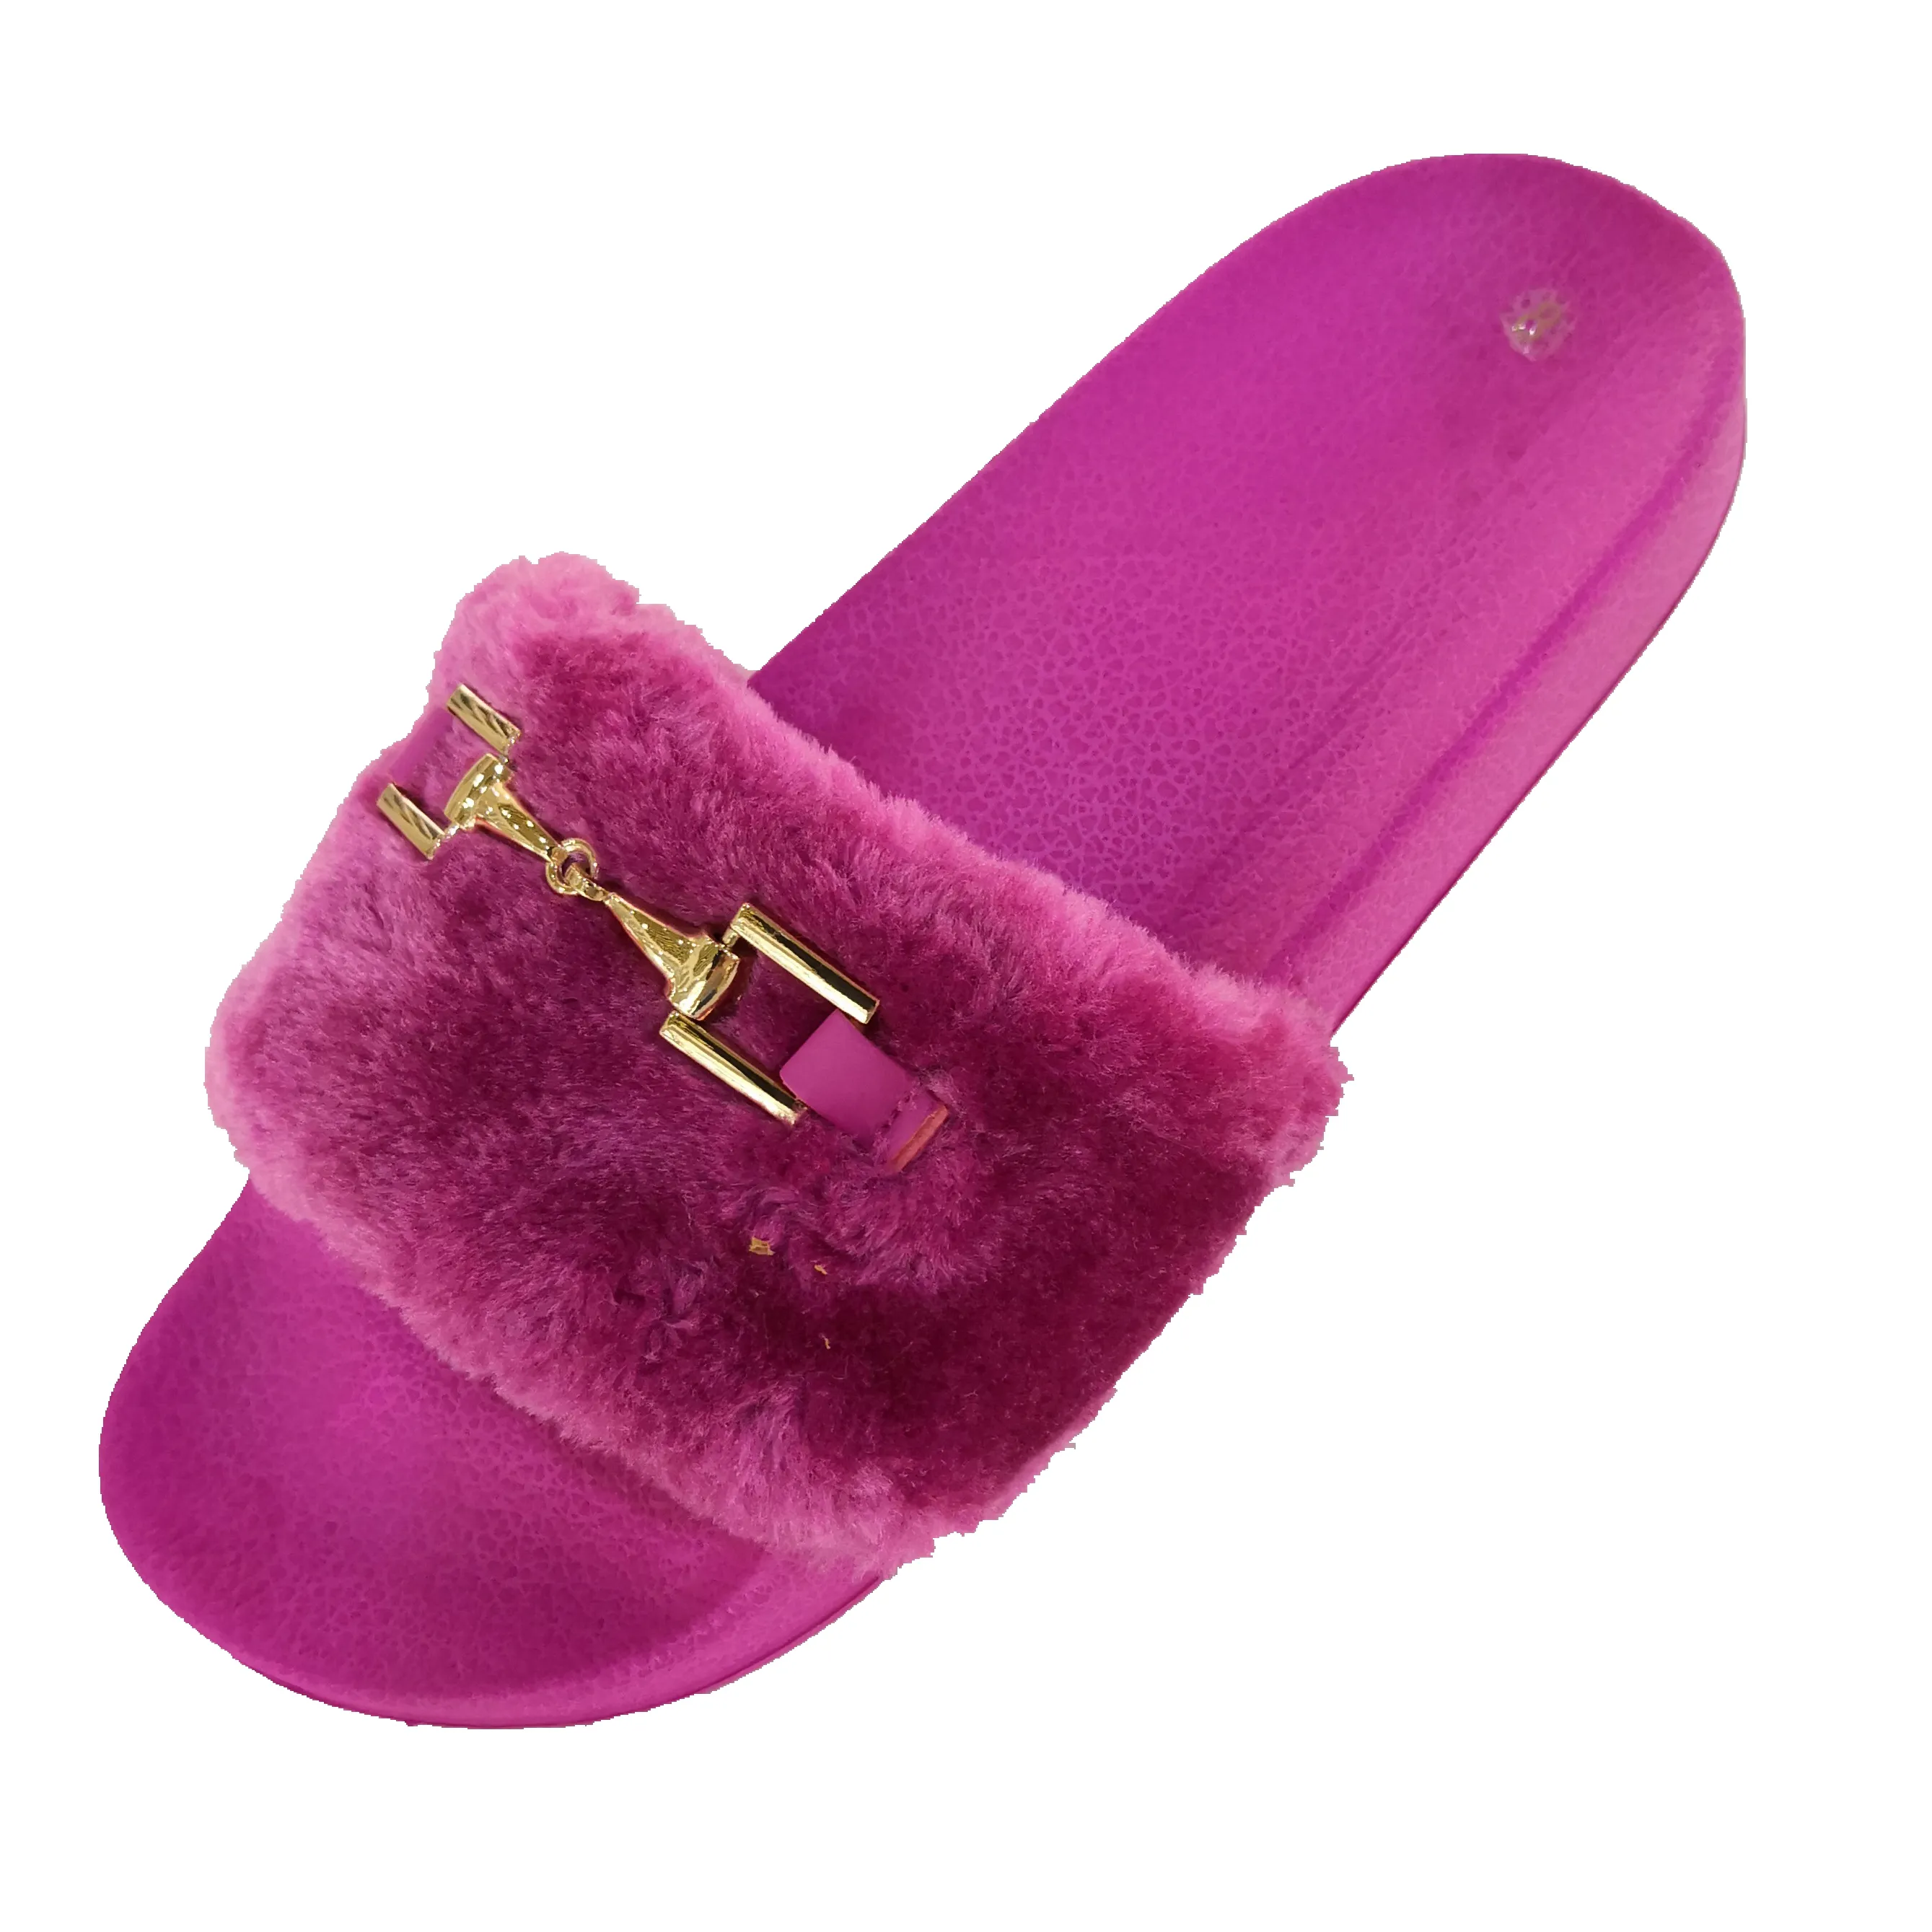 कस्टम महिला सैंडल फ्लैट कैजुअल फॉक्स फर स्लाइड लोगो सुपर फ्लफी चप्पल स्लाइड जूते महिला गुलाबी जूते सैंडल